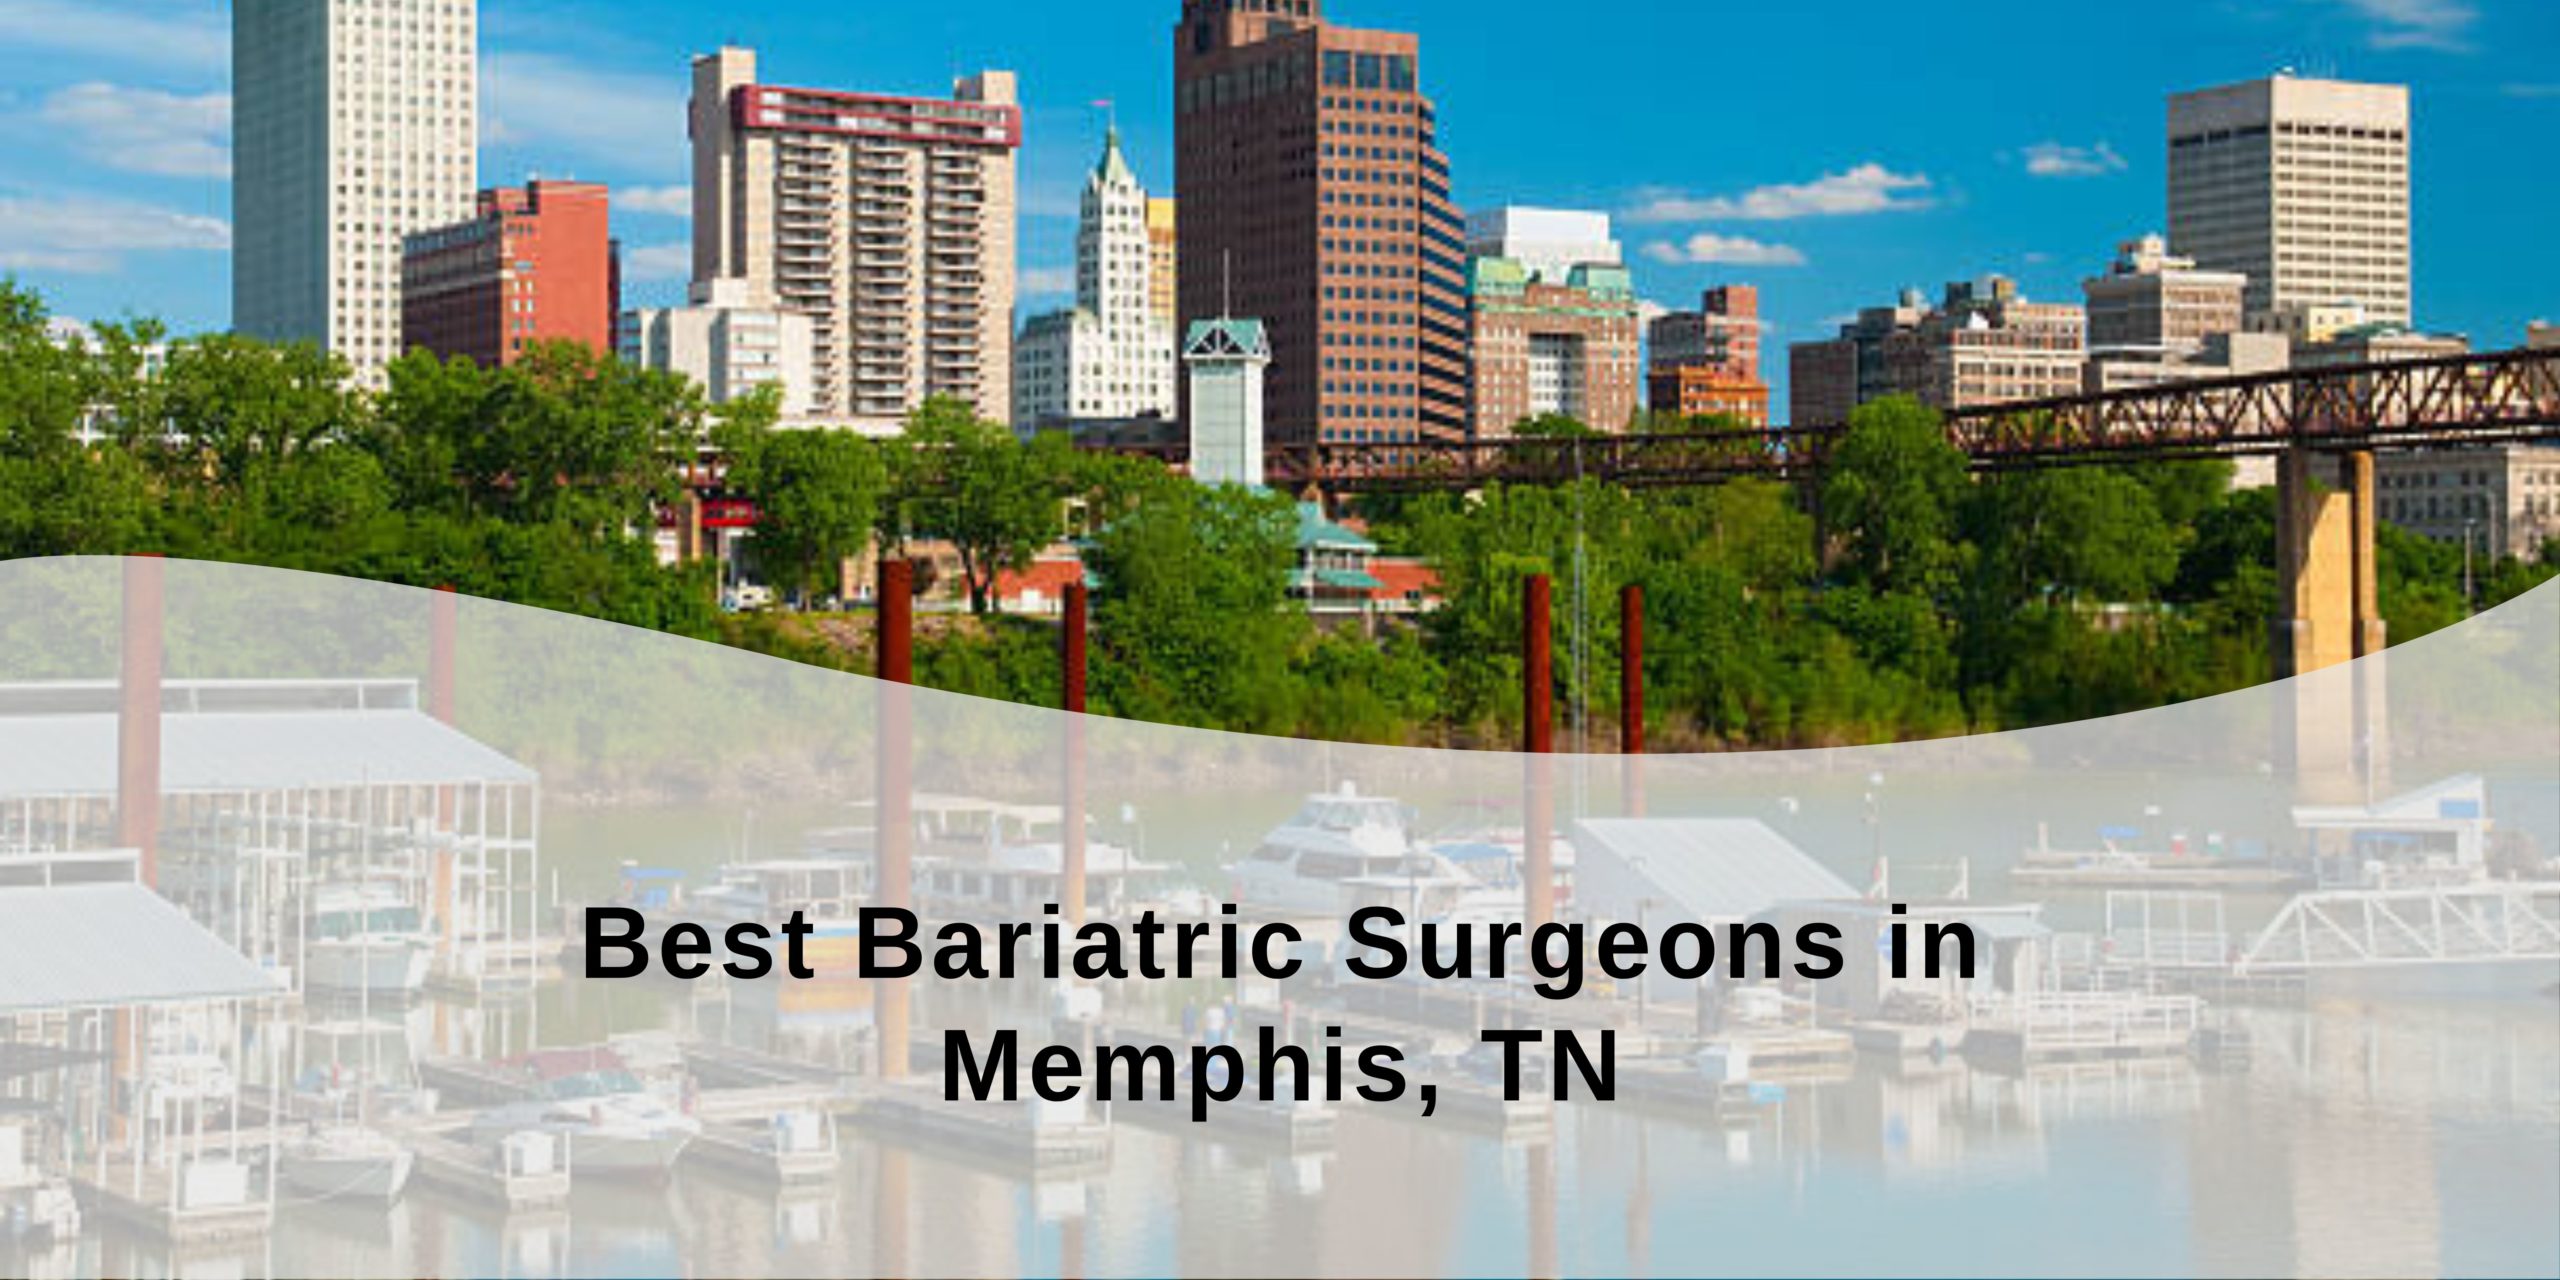 Best Bariatric Surgeons in Memphis, TN